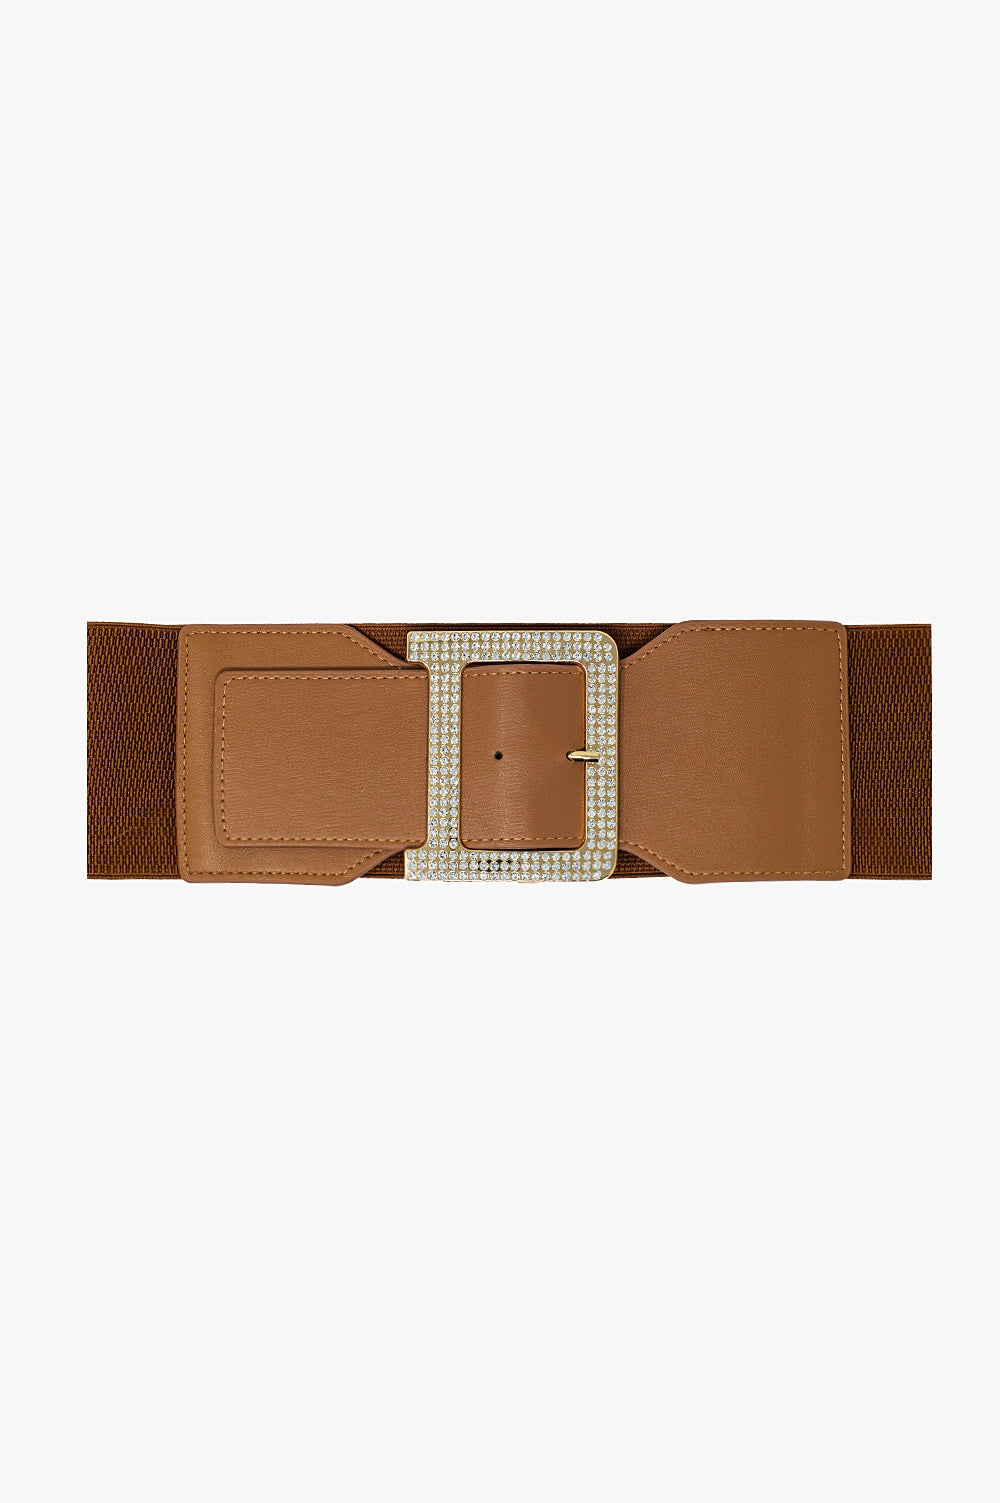 Wide elastic brown belt with rhinestone details